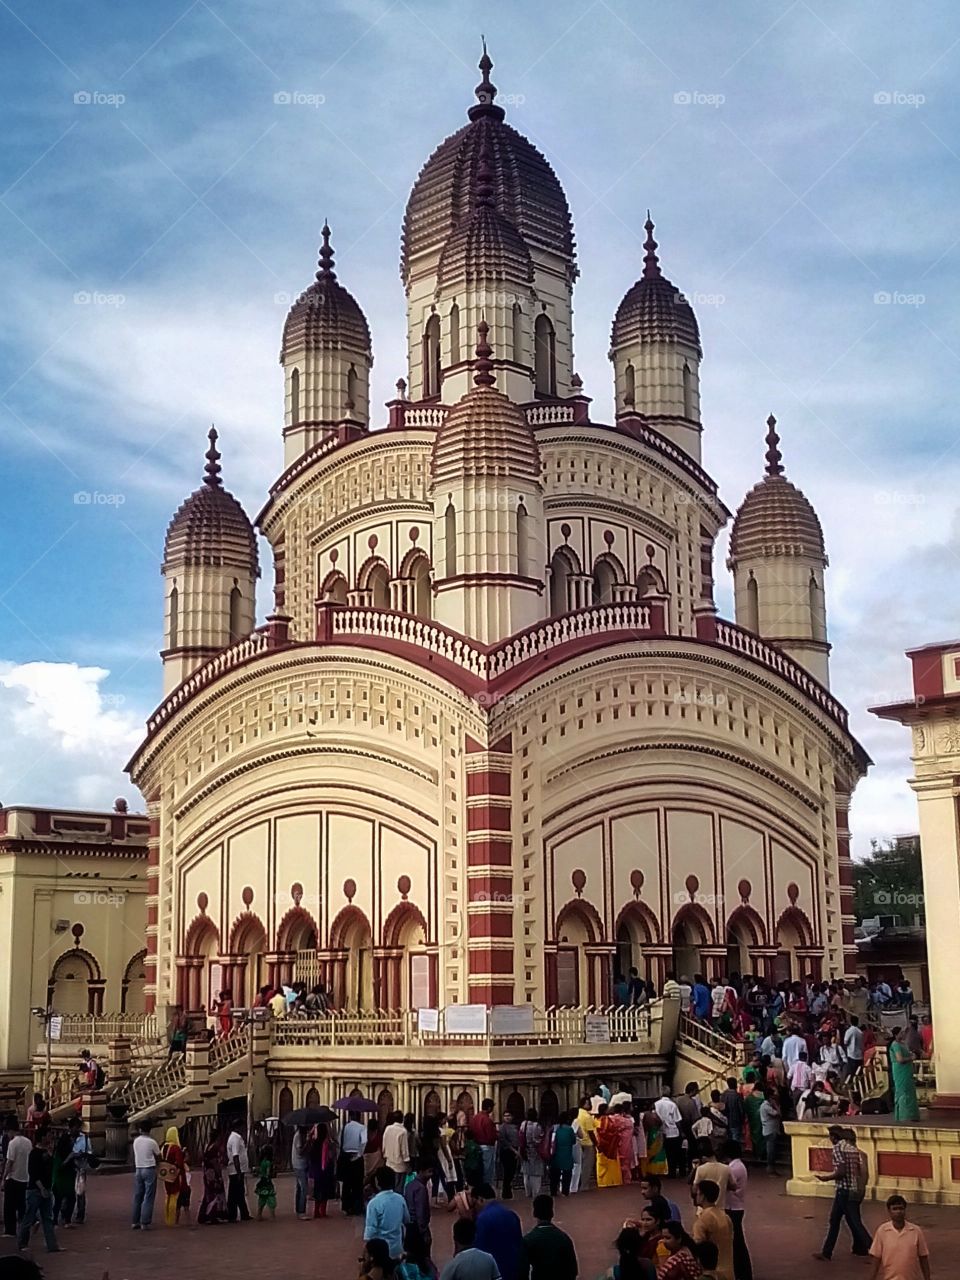 I captured this picture at Kolkata... The famous temple of Dakshneswar Devi